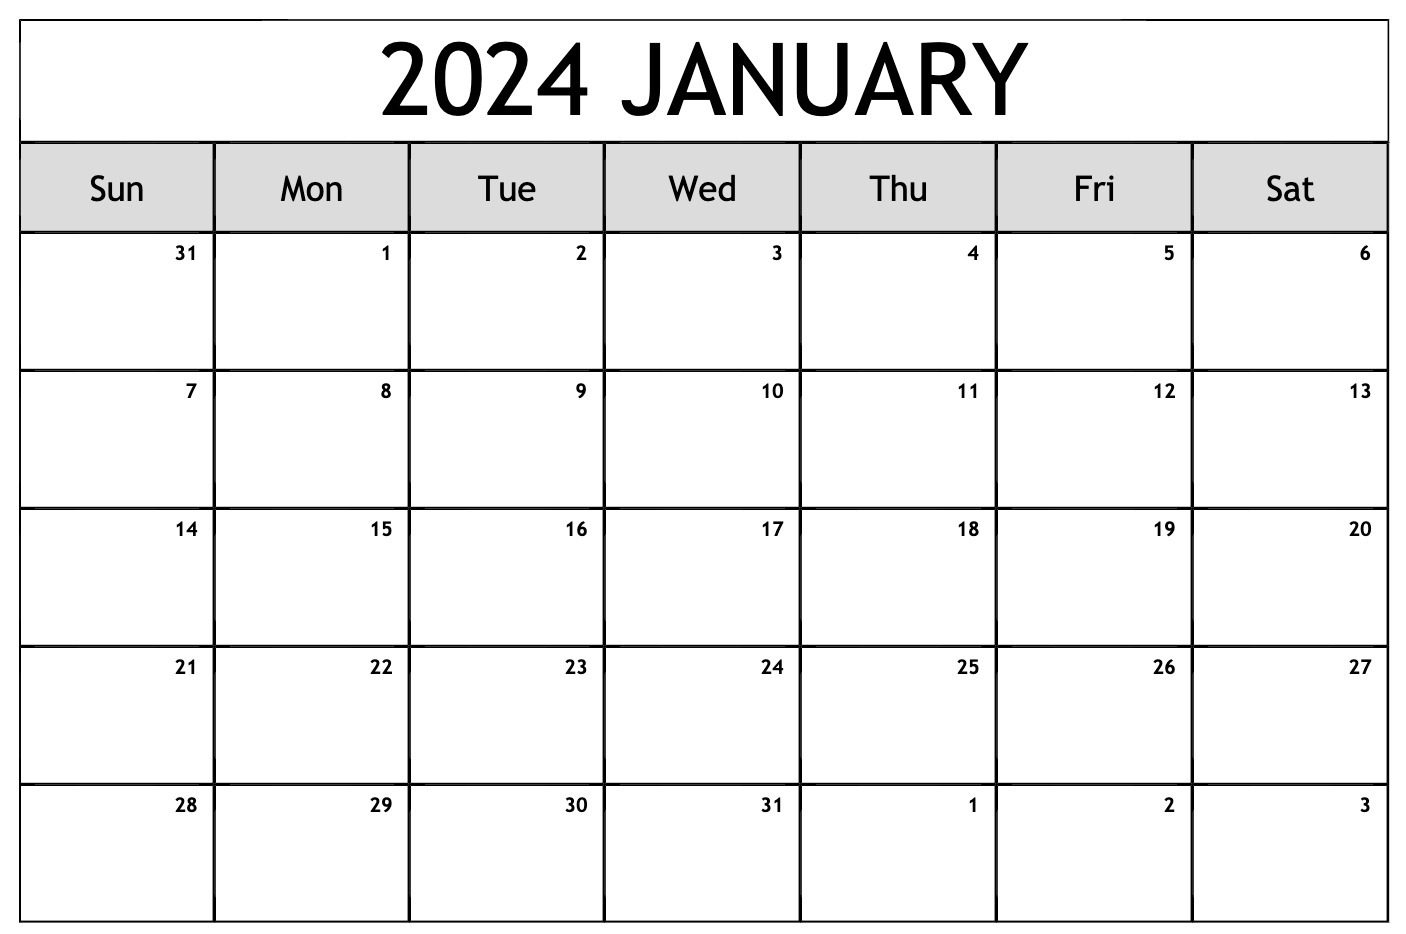 January 2024 printable calendar